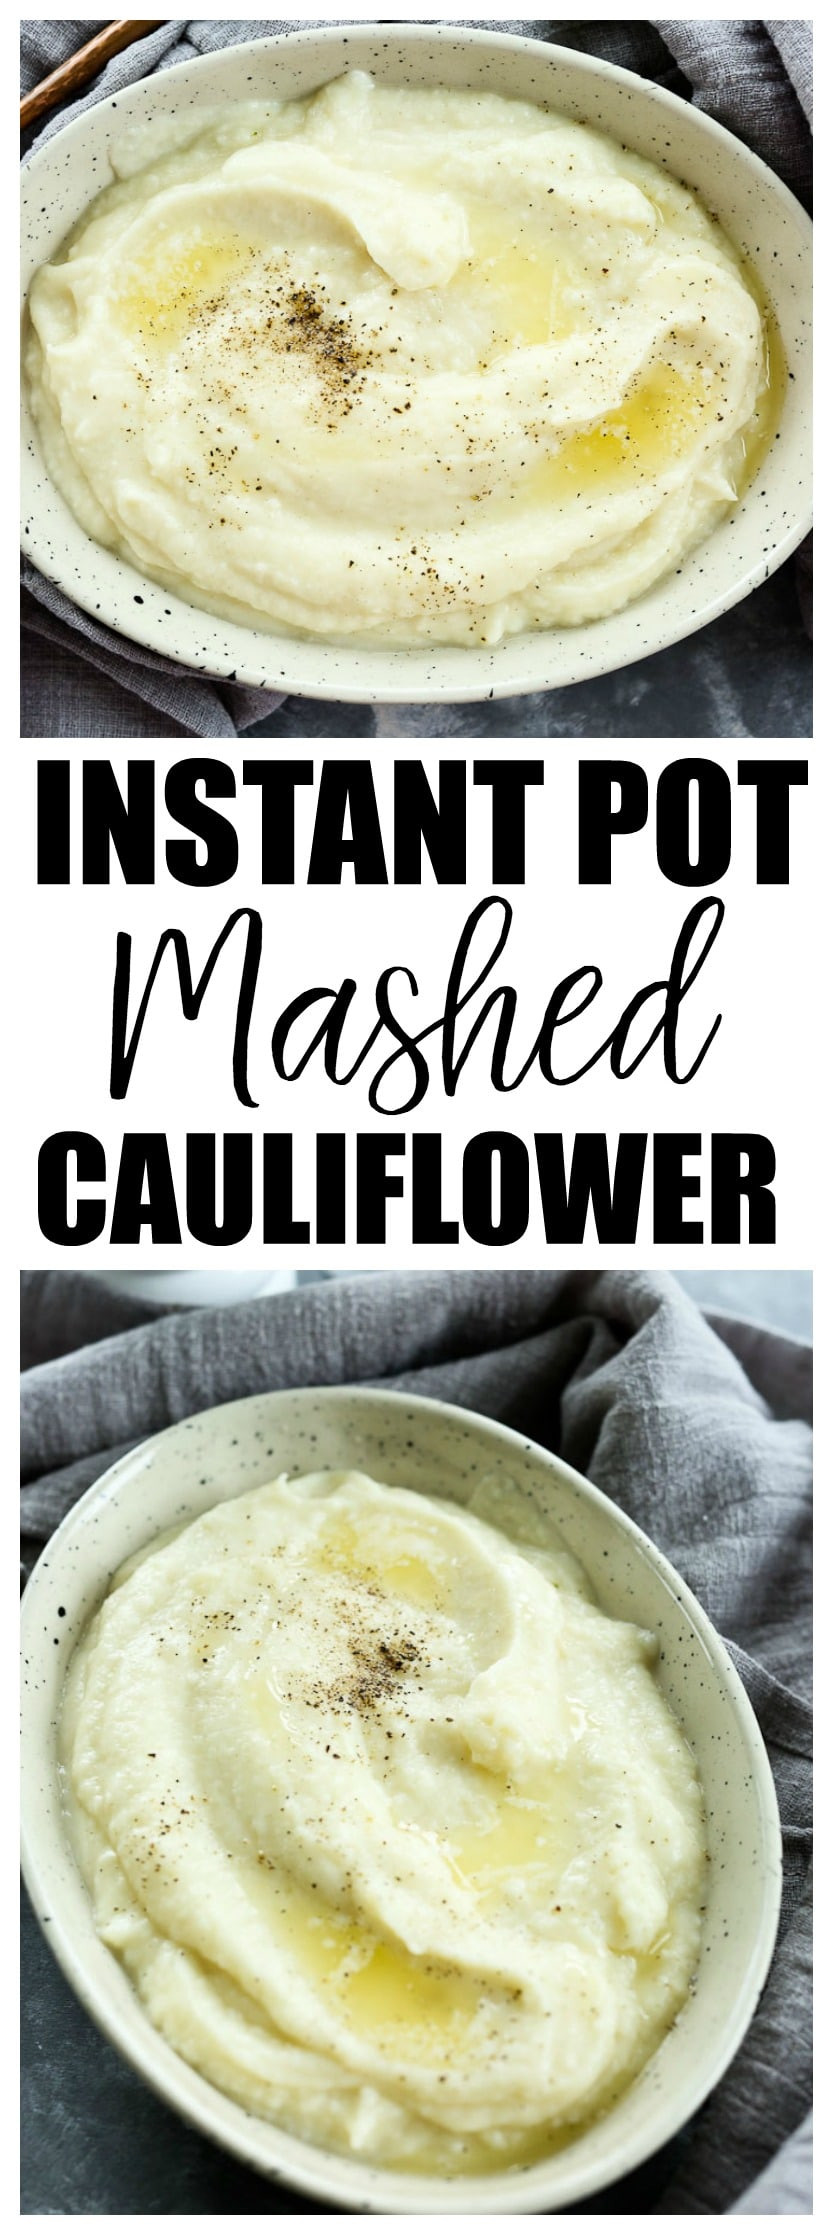 Cauliflower Instant Pot Recipes
 Instant Pot Mashed Cauliflower Happy Healthy Mama